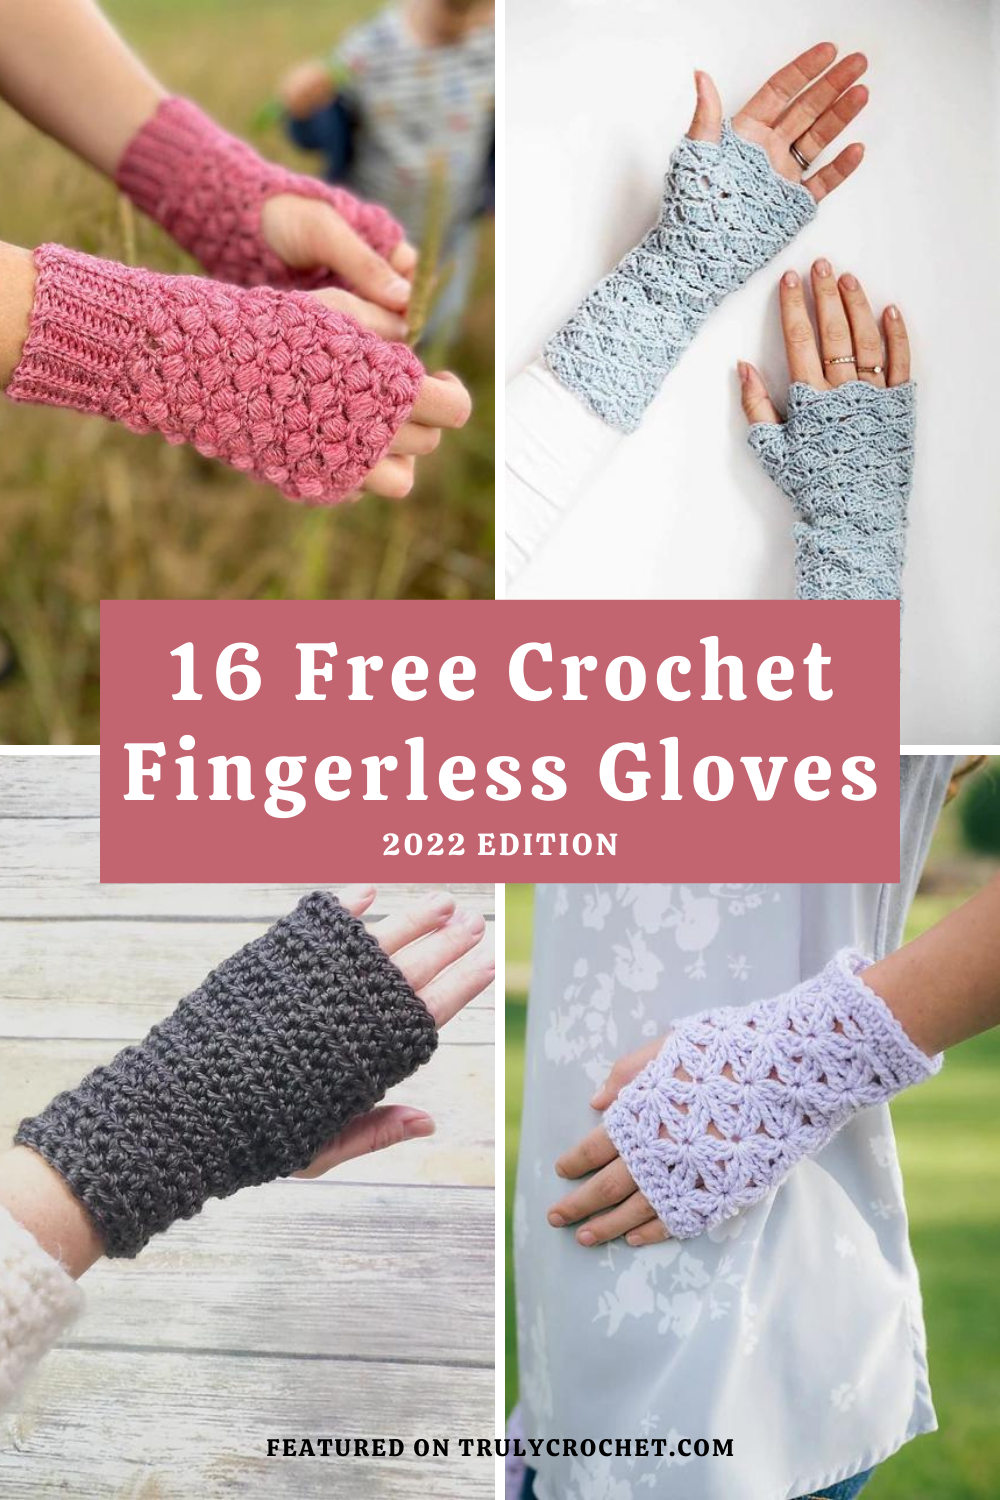 16 Free Crochet Fingerless Glove Patterns - 2022